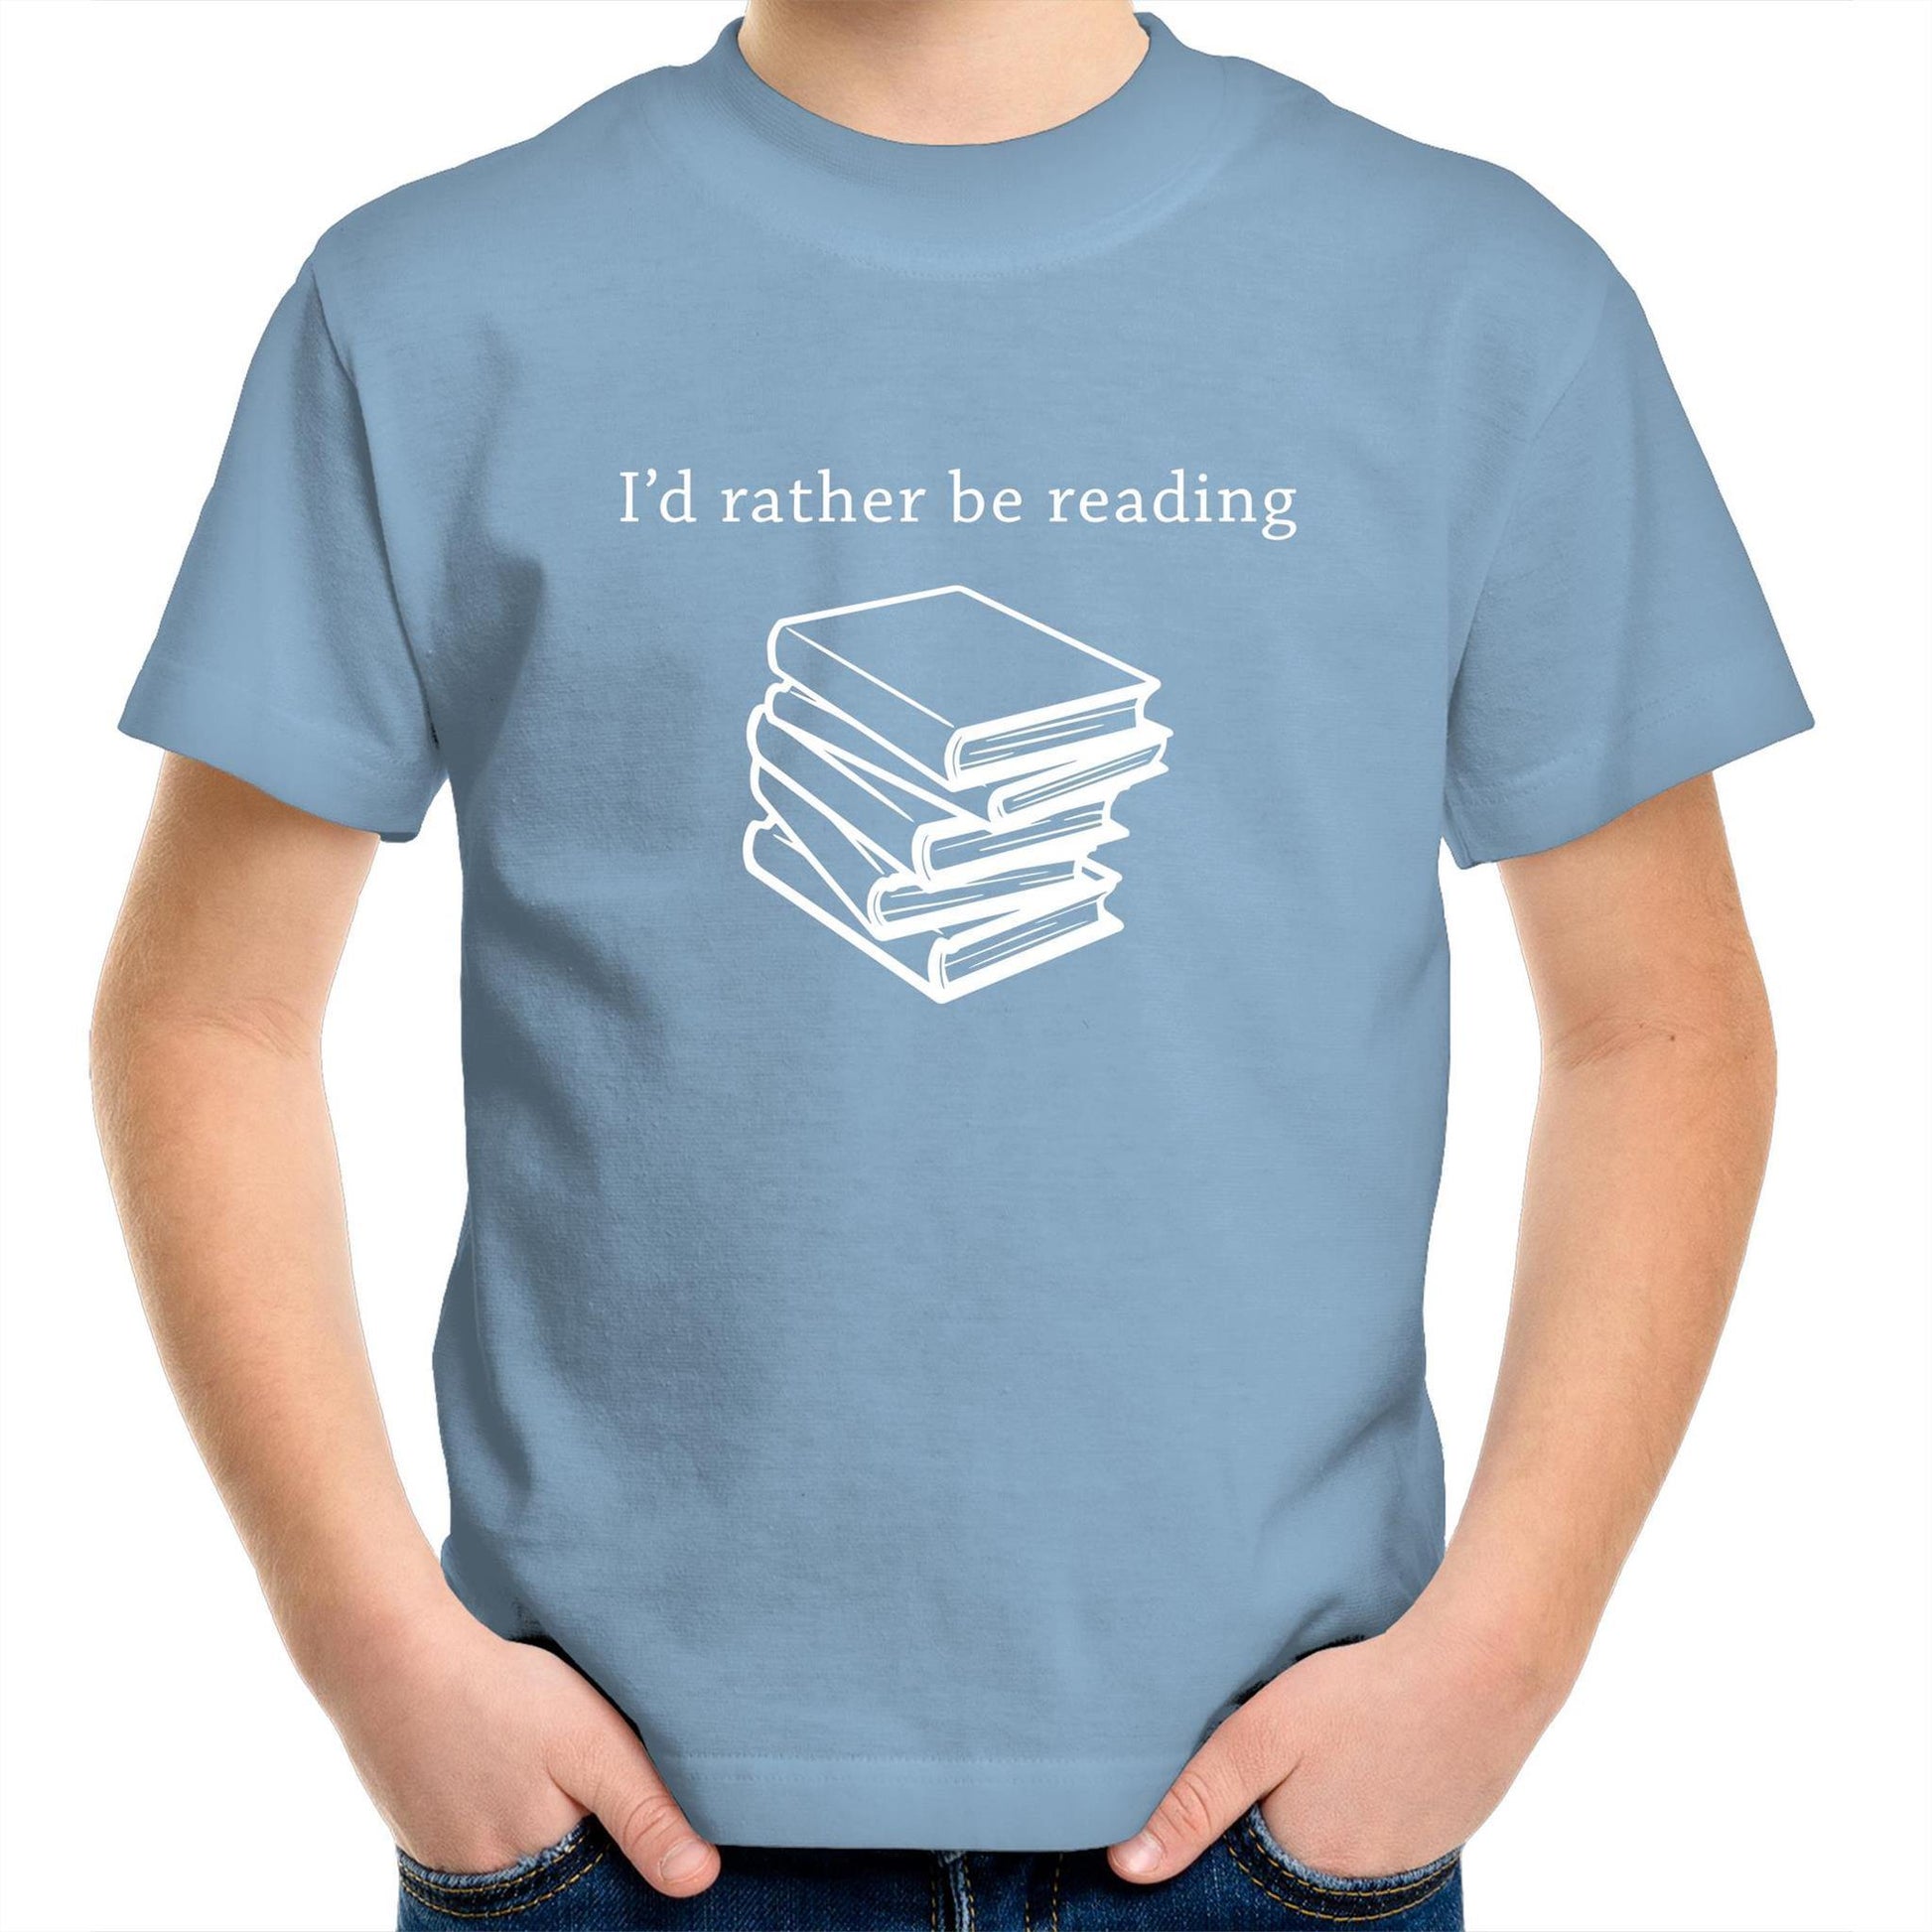 I'd Rather Be Reading - Kids Youth Crew T-Shirt Carolina Blue Kids Youth T-shirt Funny